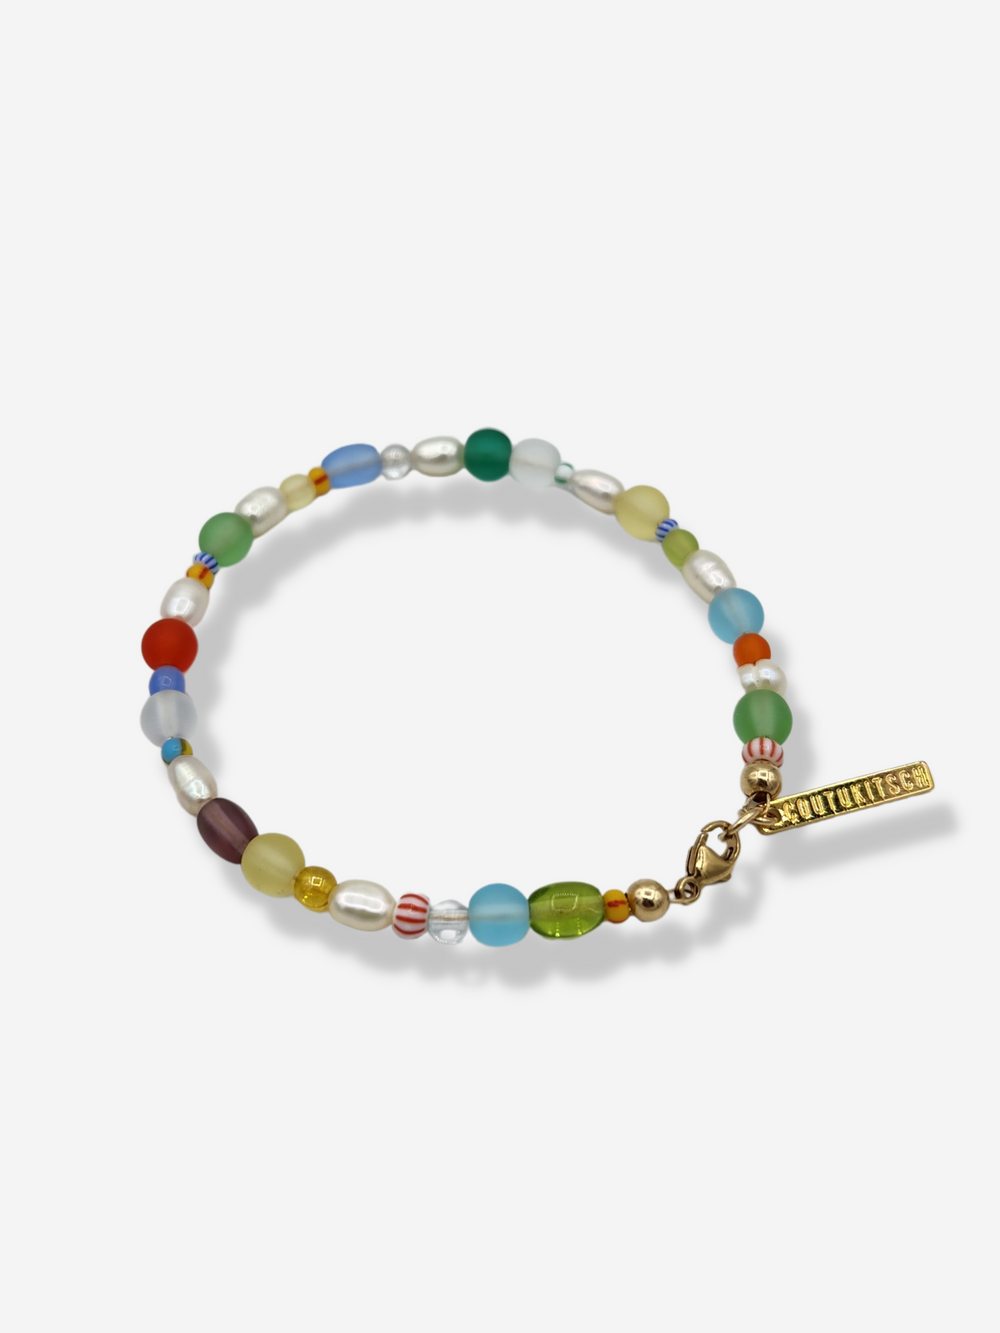 bead.bby x COUTU | Beach Baby Bracelet